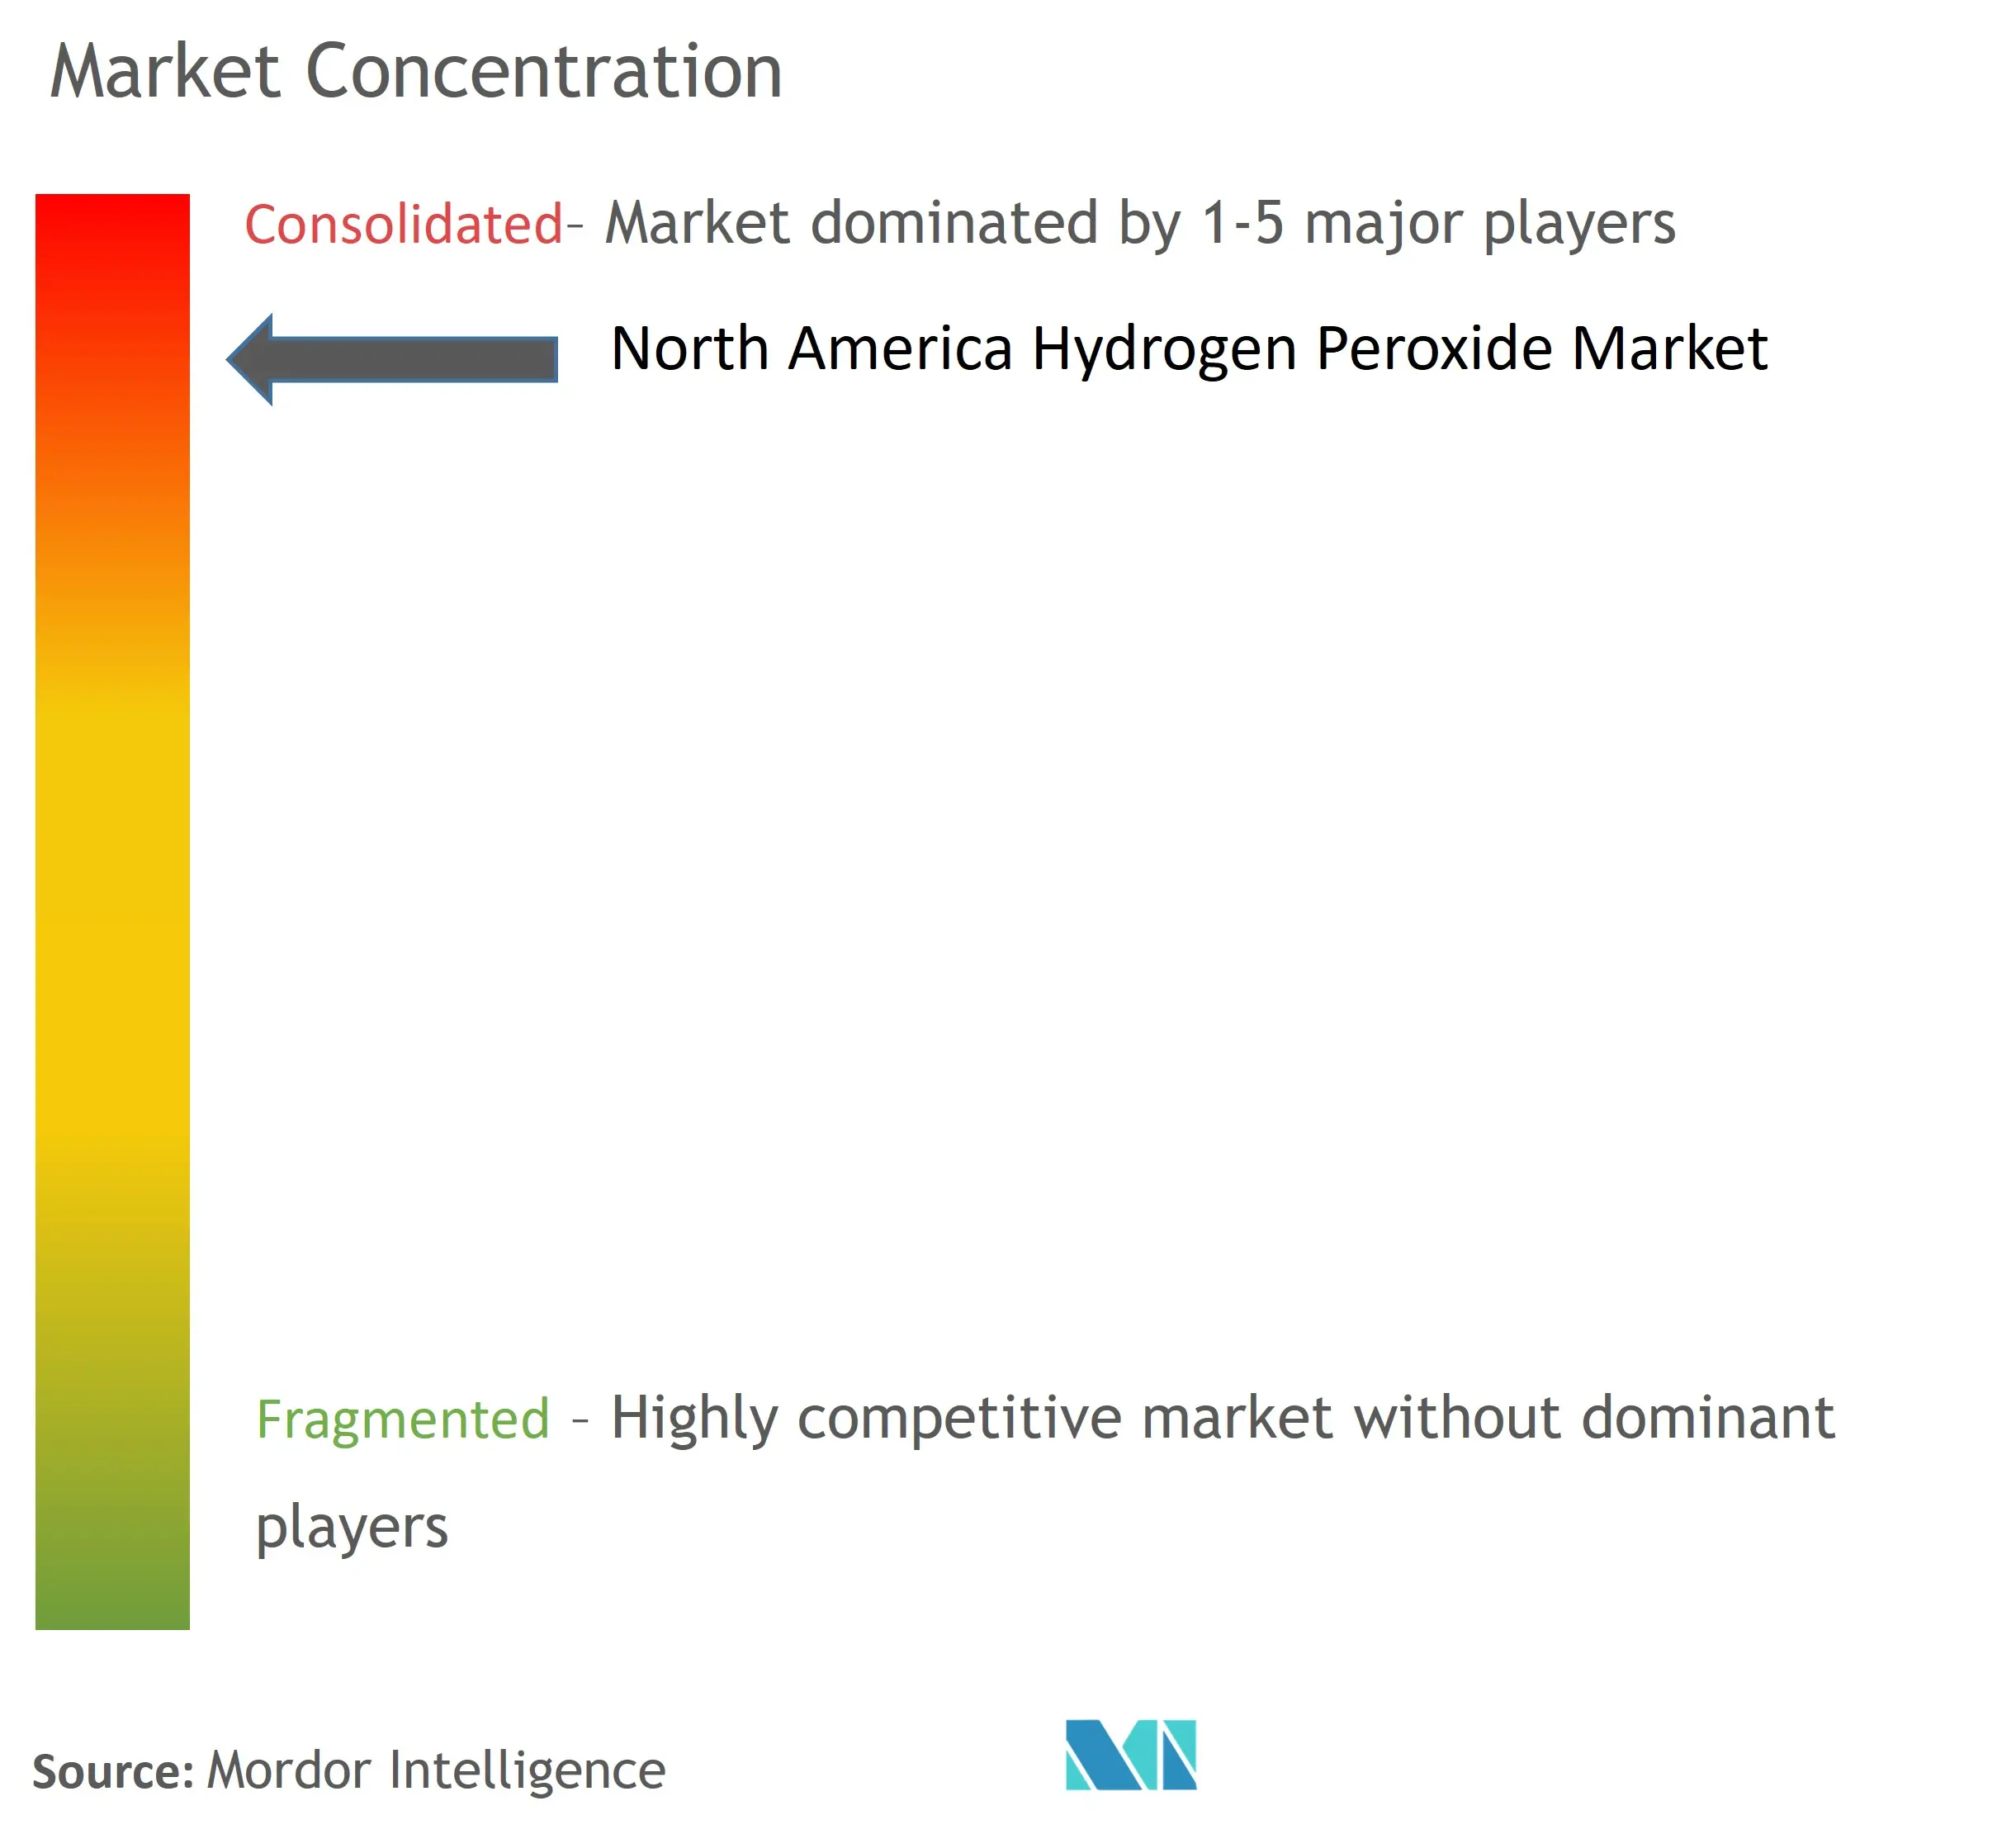 North America Hydrogen Peroxide Market Concentration